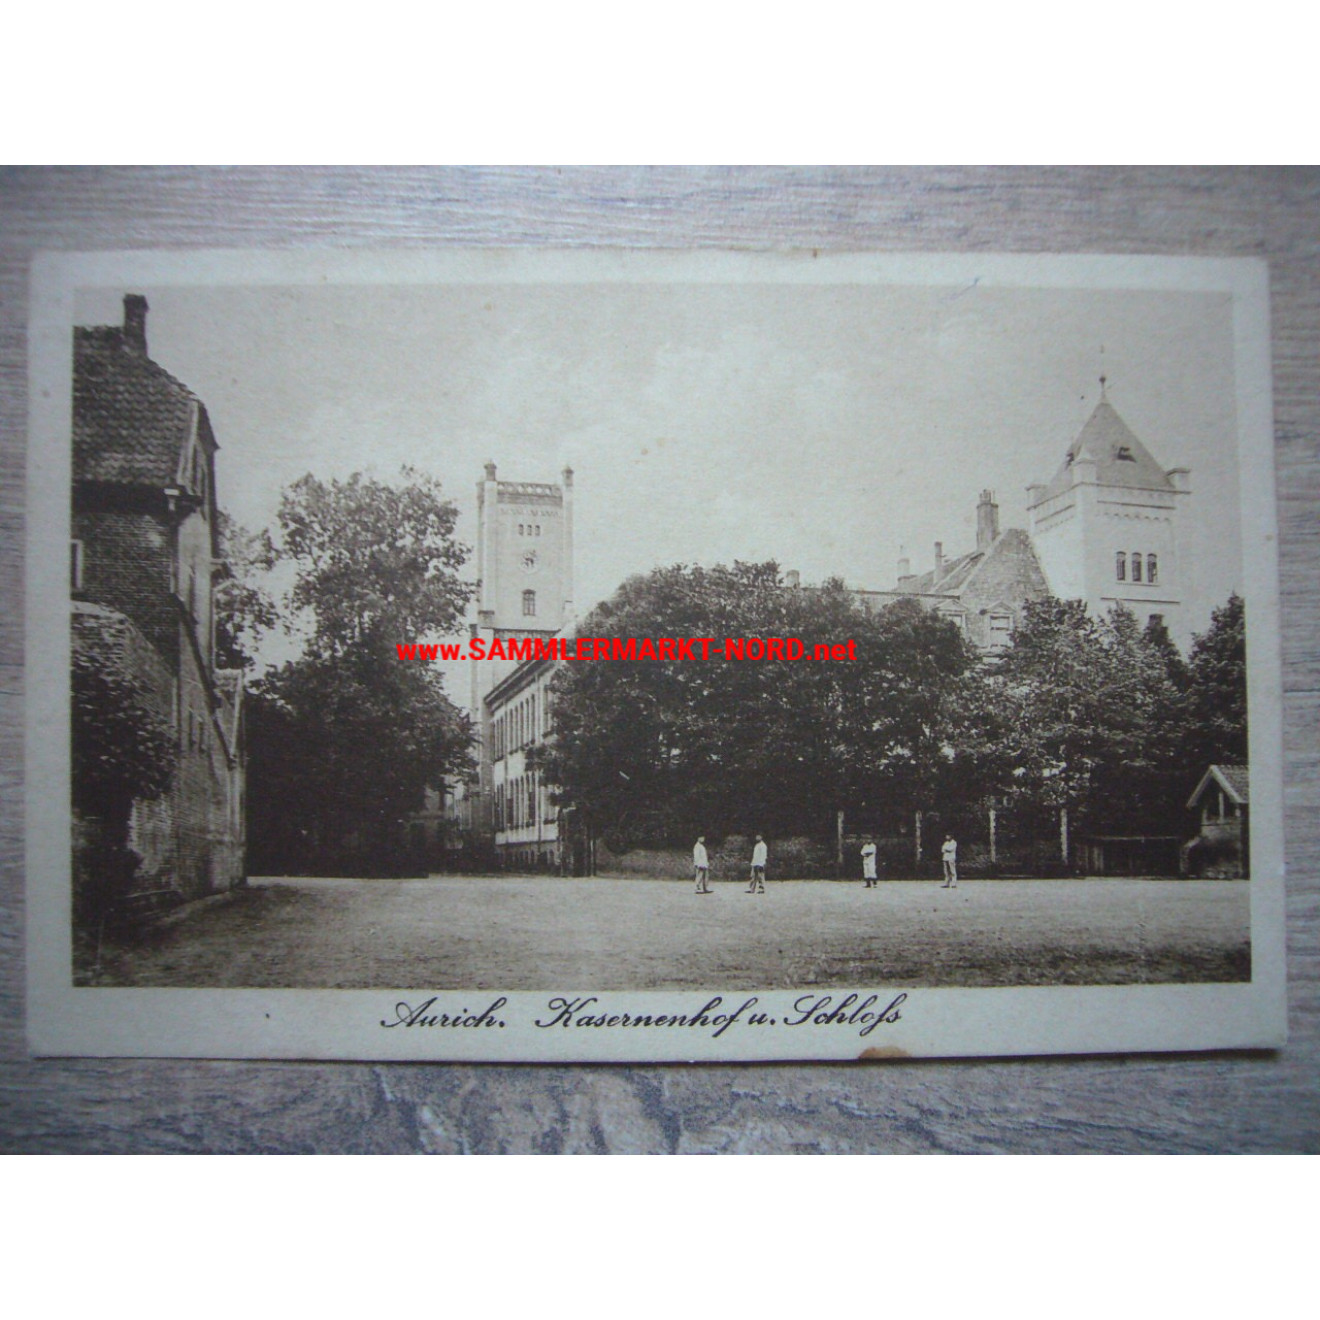 Aurich - barracks yard and castle - postcard